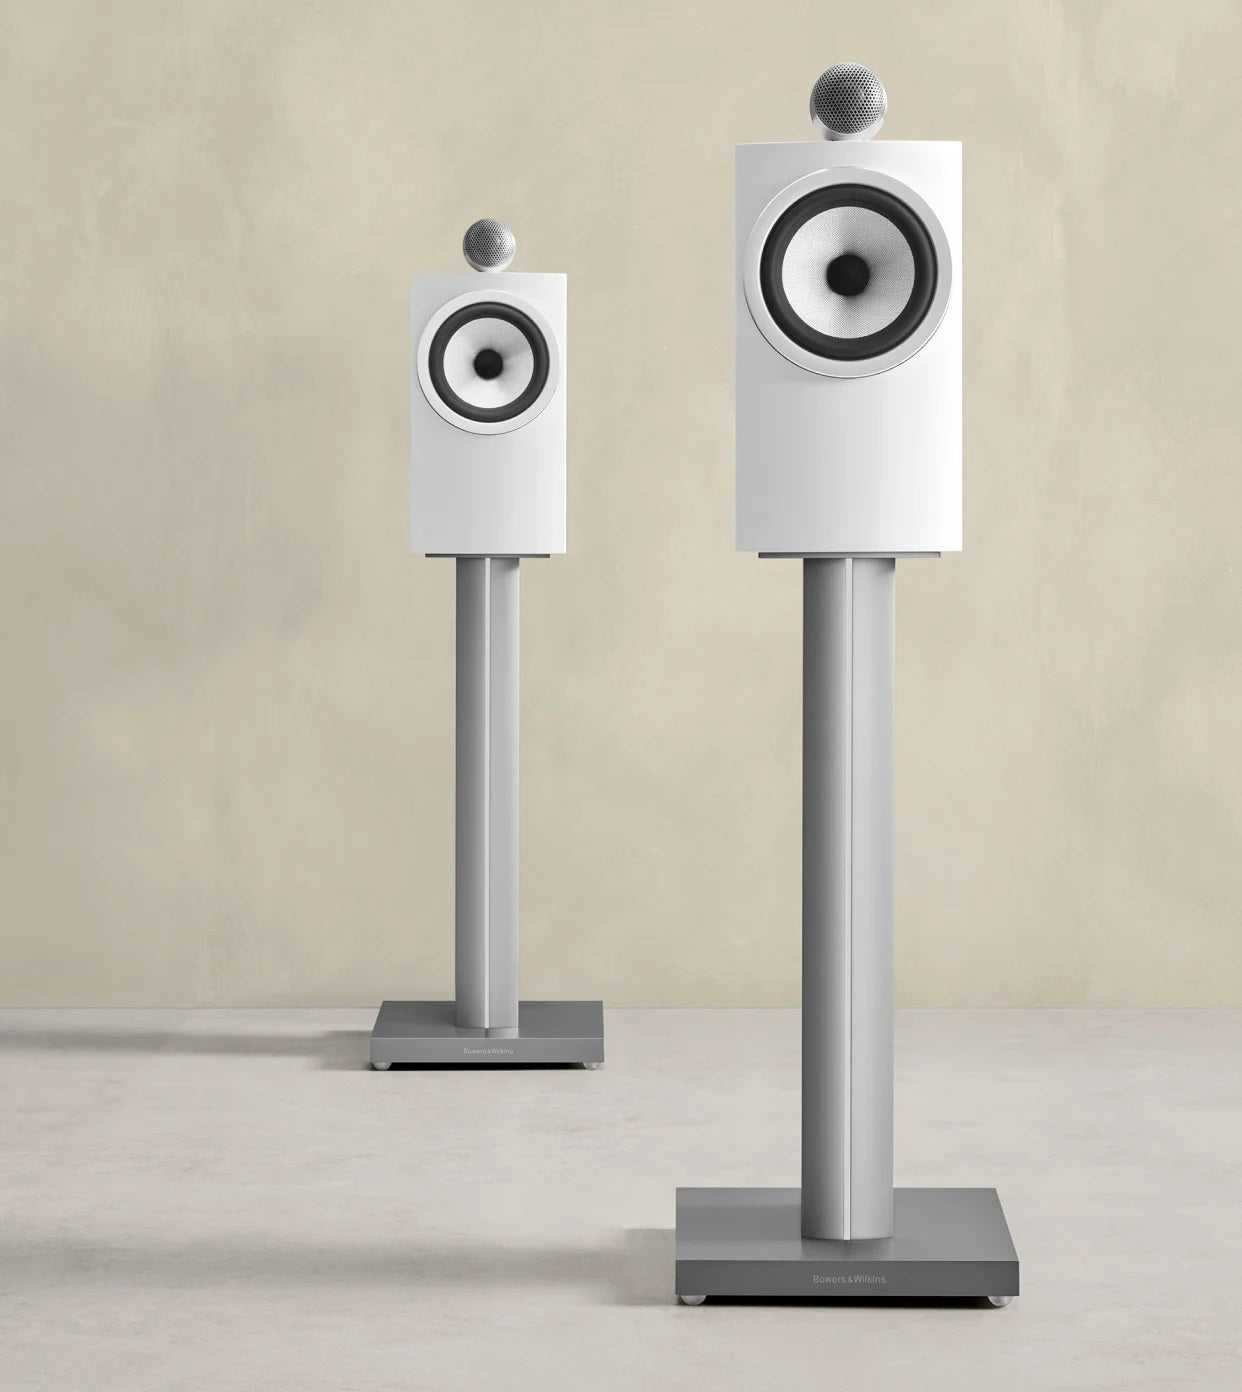 Bowers & Wilkins FS‑700 S3 - Speaker Stands (Pair)